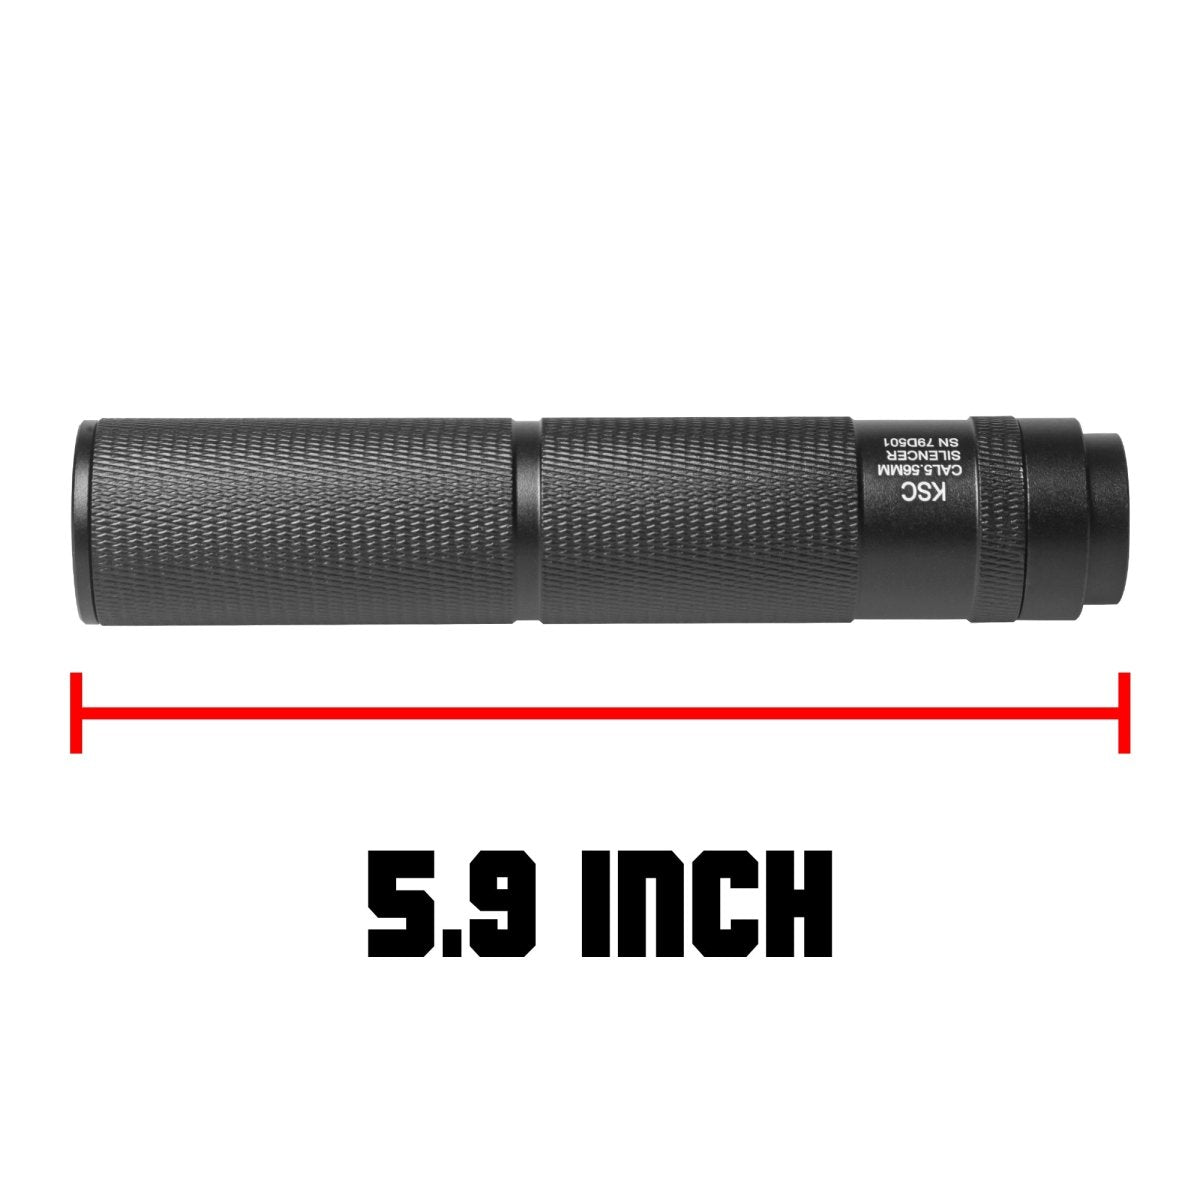 EMERBU Metal KSC Silencer(Black) - 14mm CCW - EmerbutoysEmerbutoys